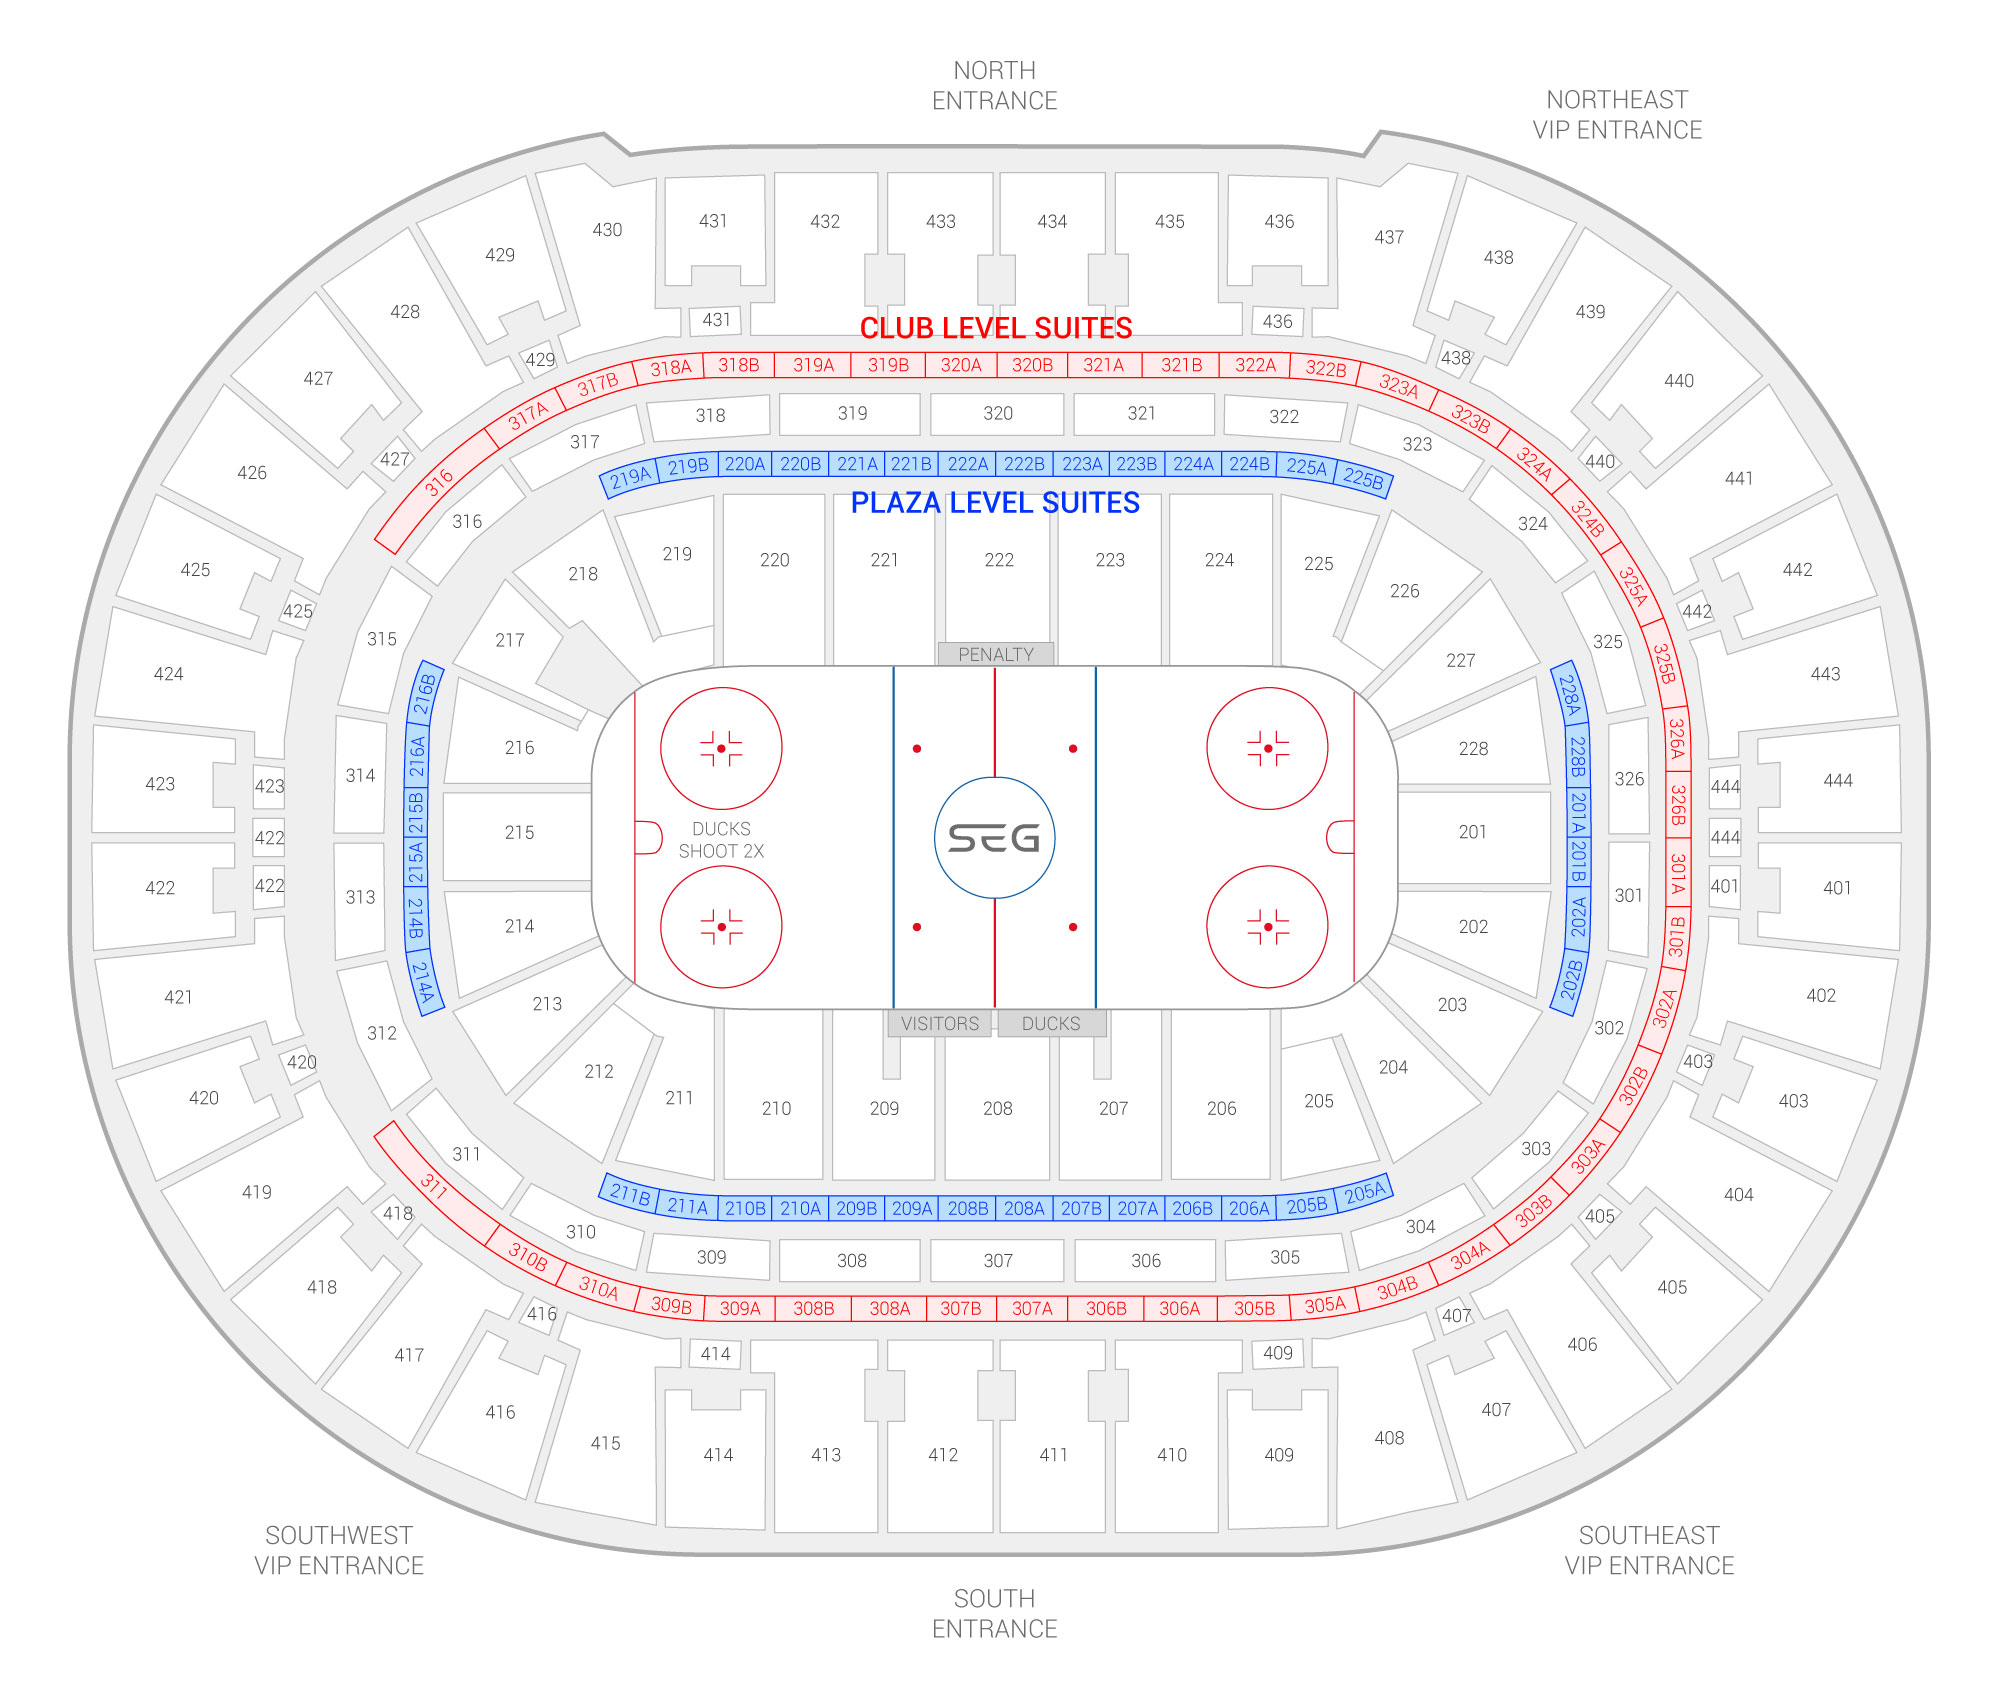 Honda Center / Anaheim Ducks Suite Map and Seating Chart